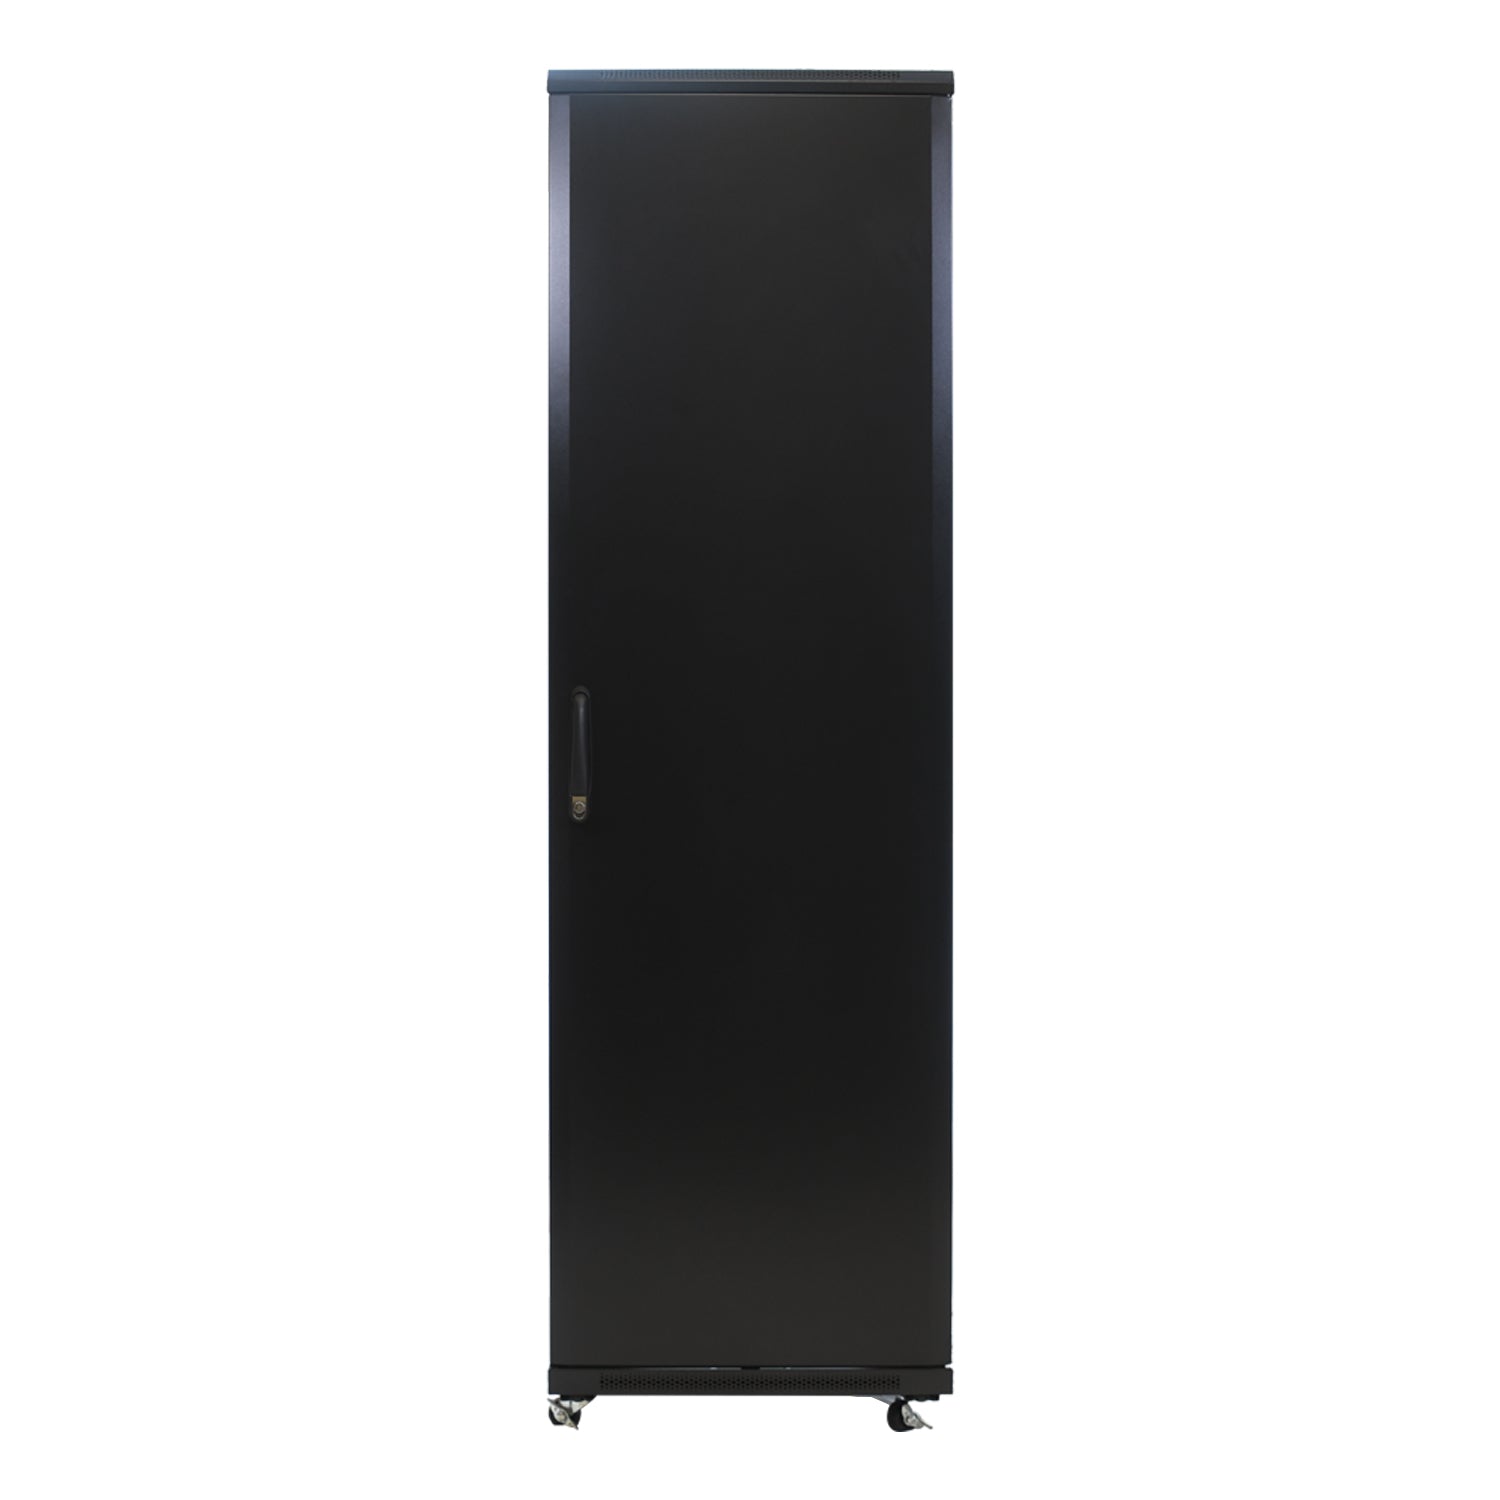 Aeons G-Seires 42U Professional Server Rack Enclosure Cabinet Kit, Mid-Depth, Secure Glass Door, Cable Management